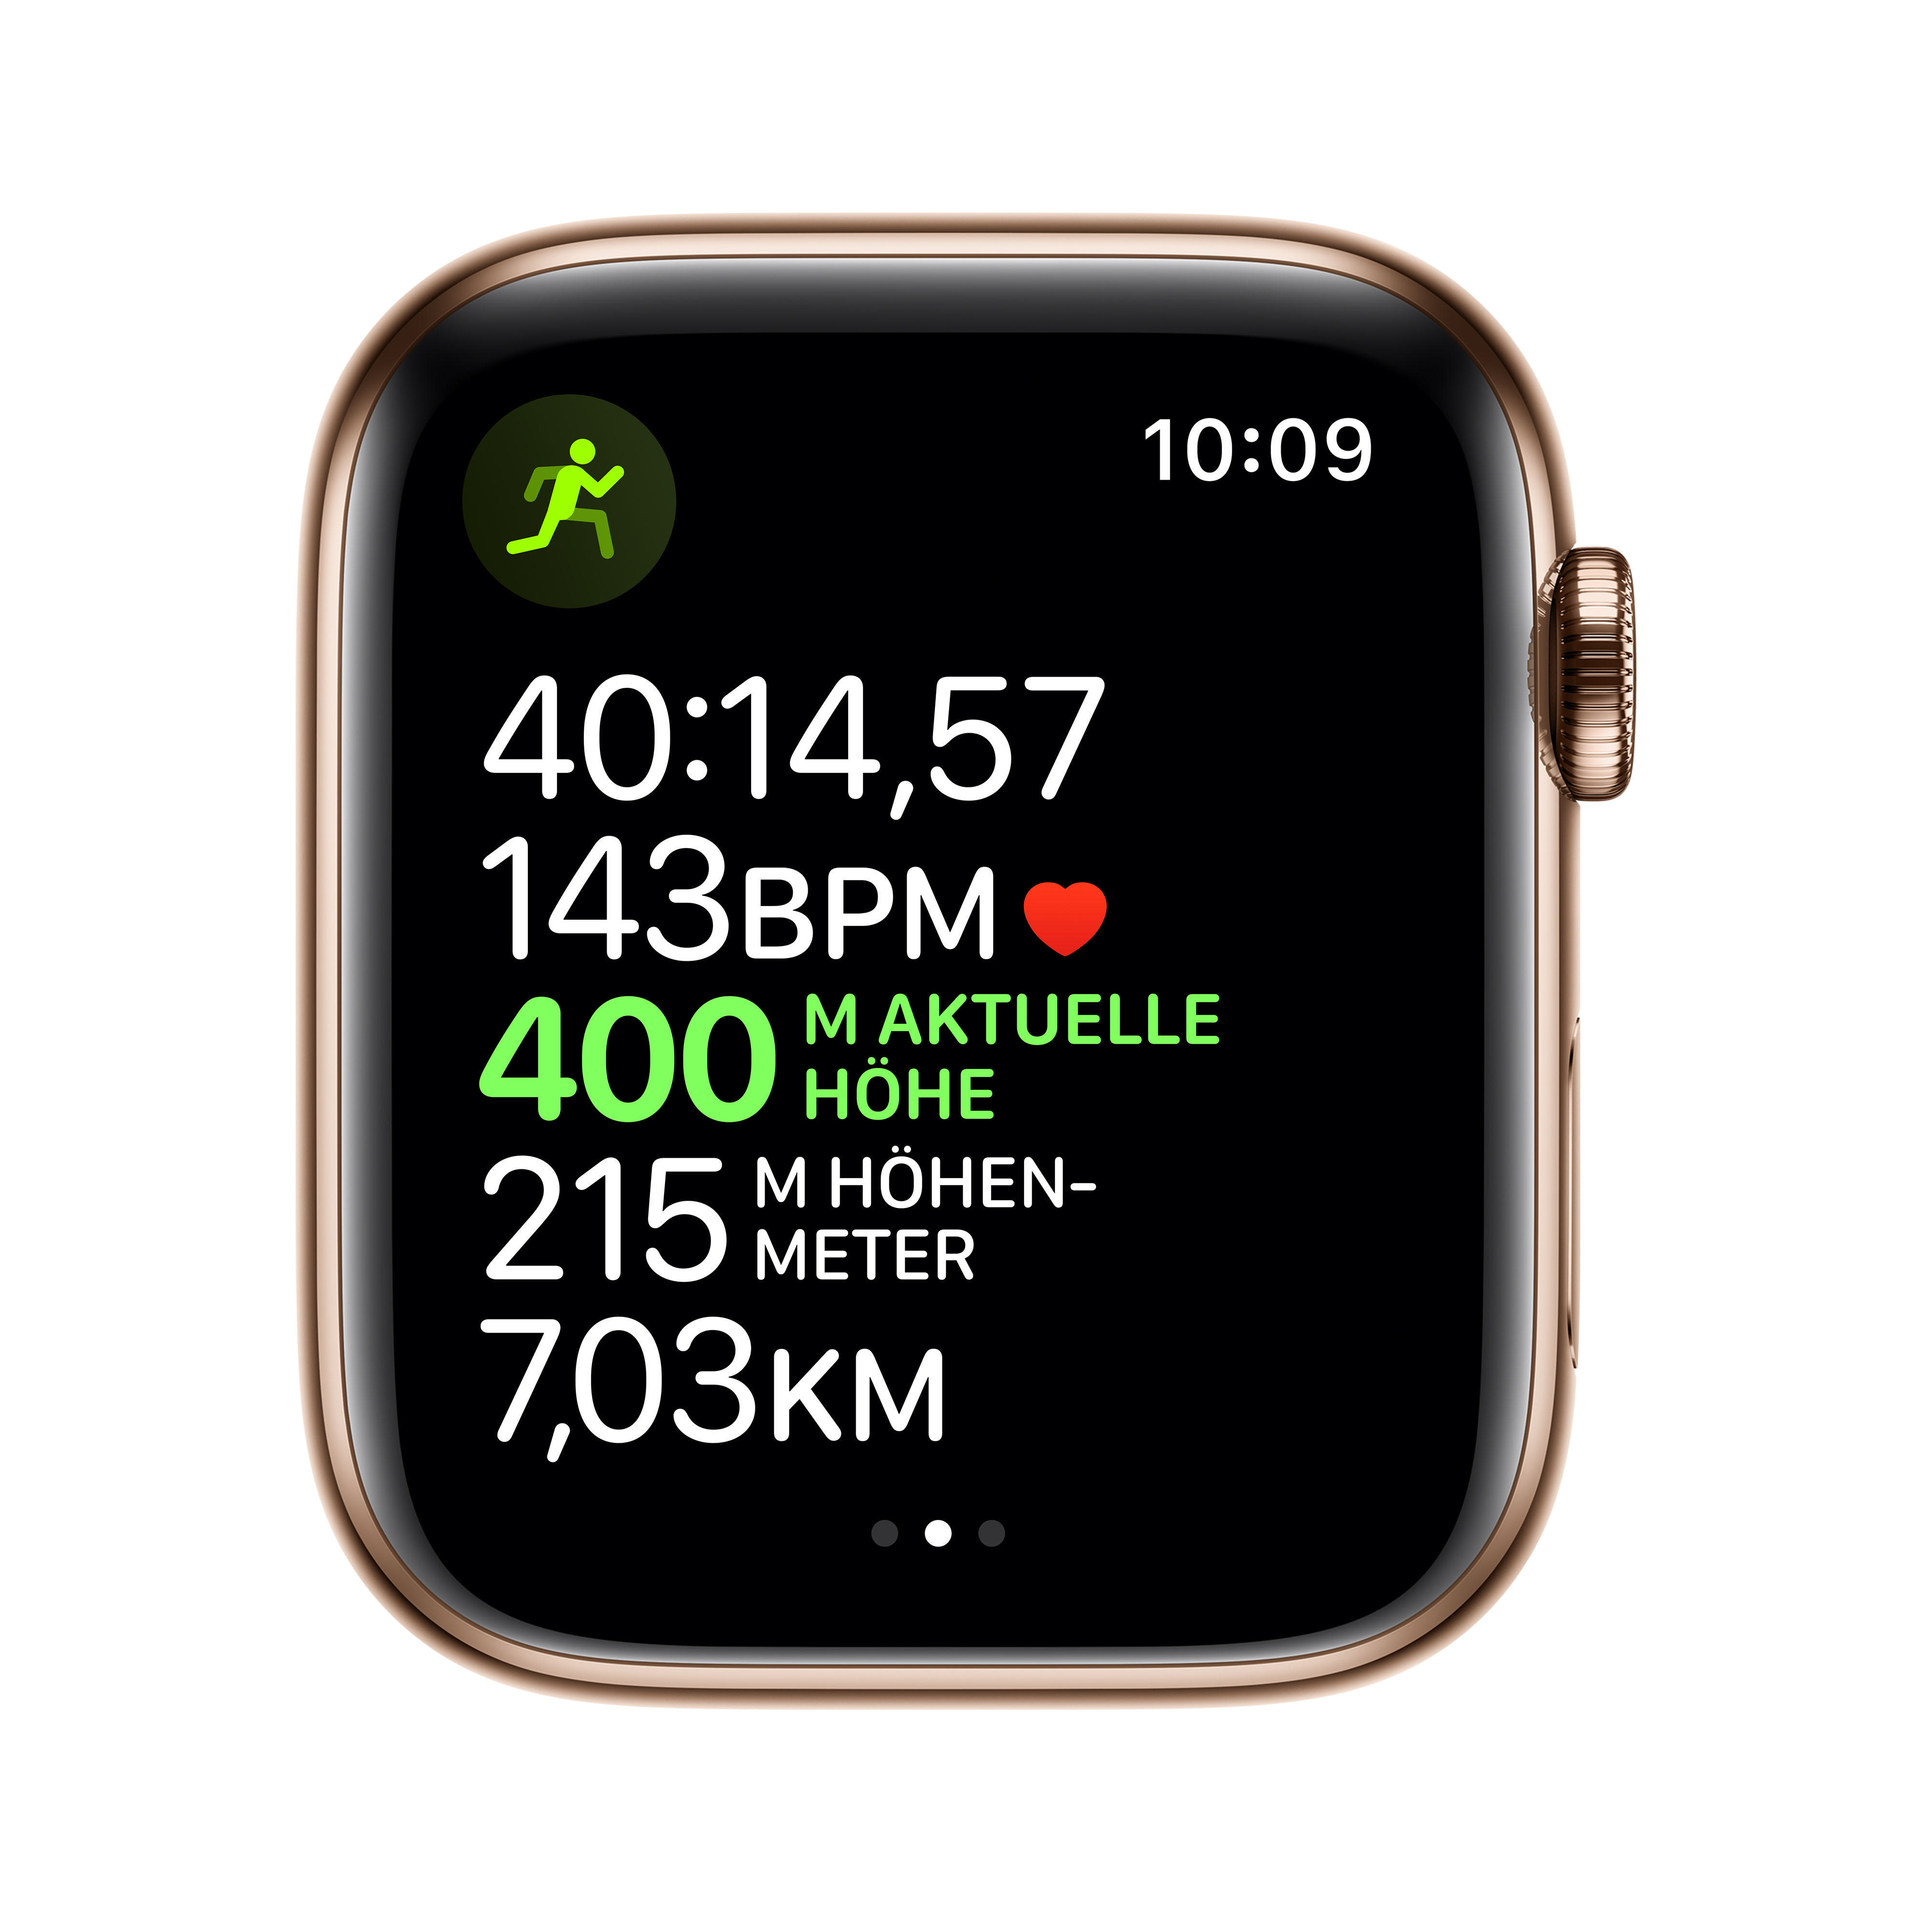 APPLE Watch Series 5 mm 140 Armband: 200 Gold + Milanaise, Edelstahl Gold Smartwatch 44mm (GPS Edelstahl - Cellular) Edelstahl, Gehäuse: 